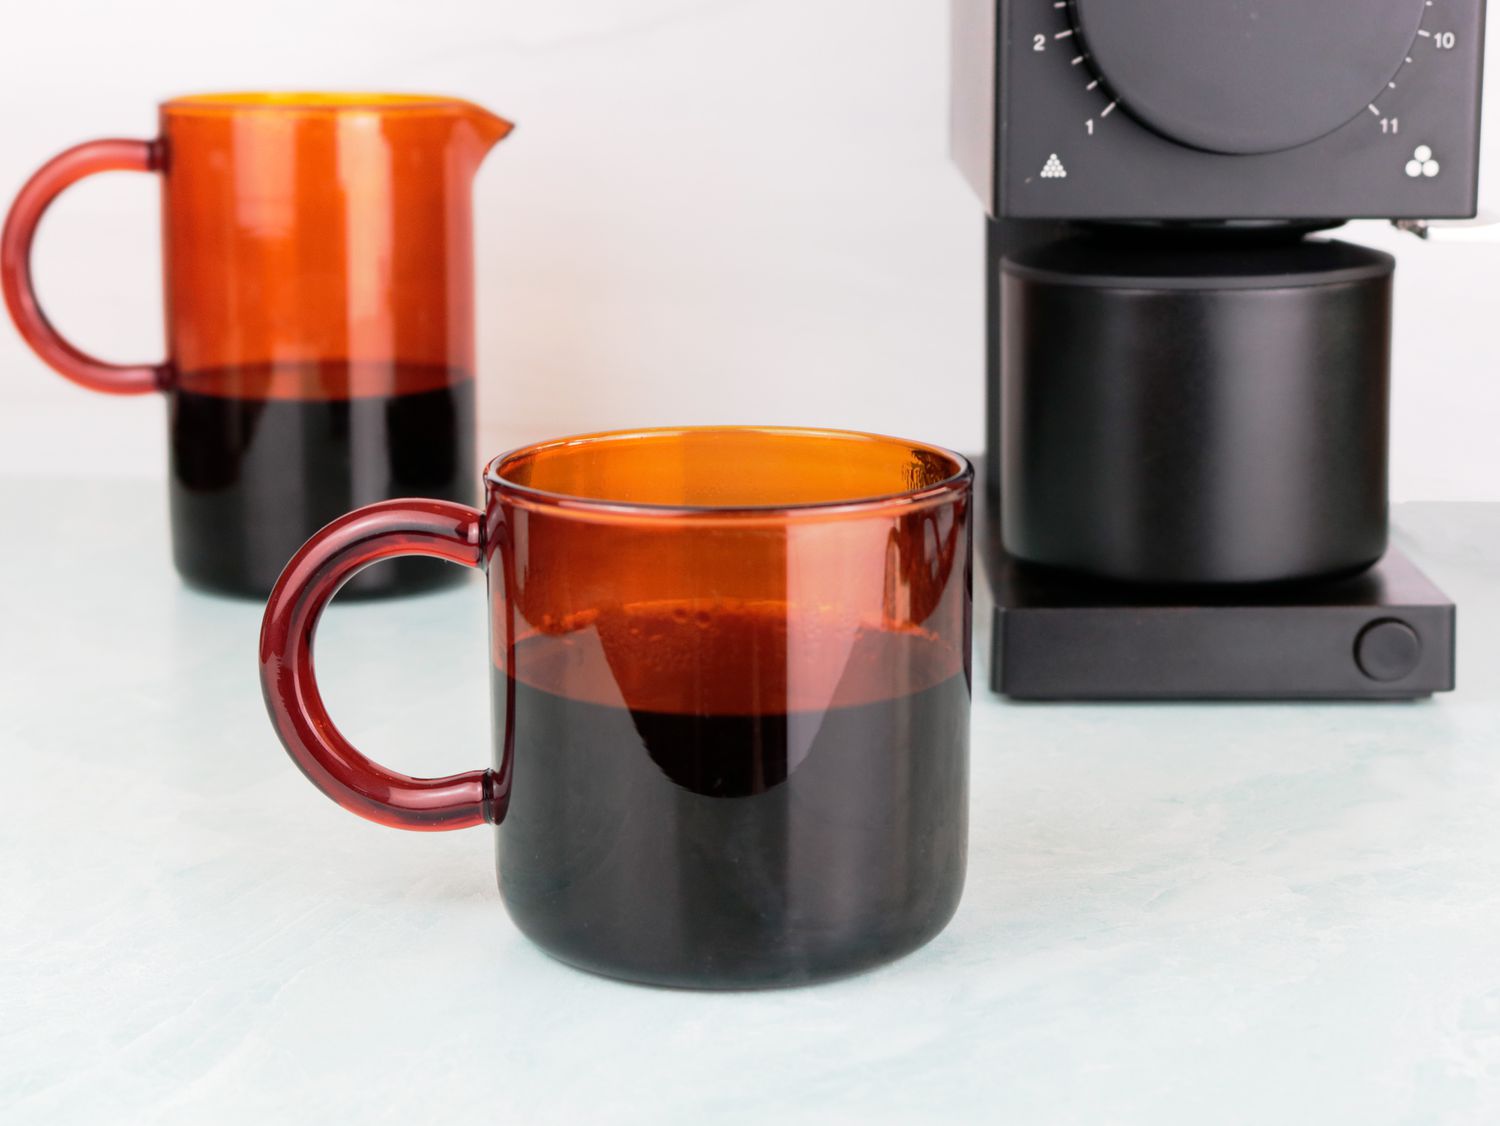 a Manual amber glass coffee mug next to a carafe and coffee grinder